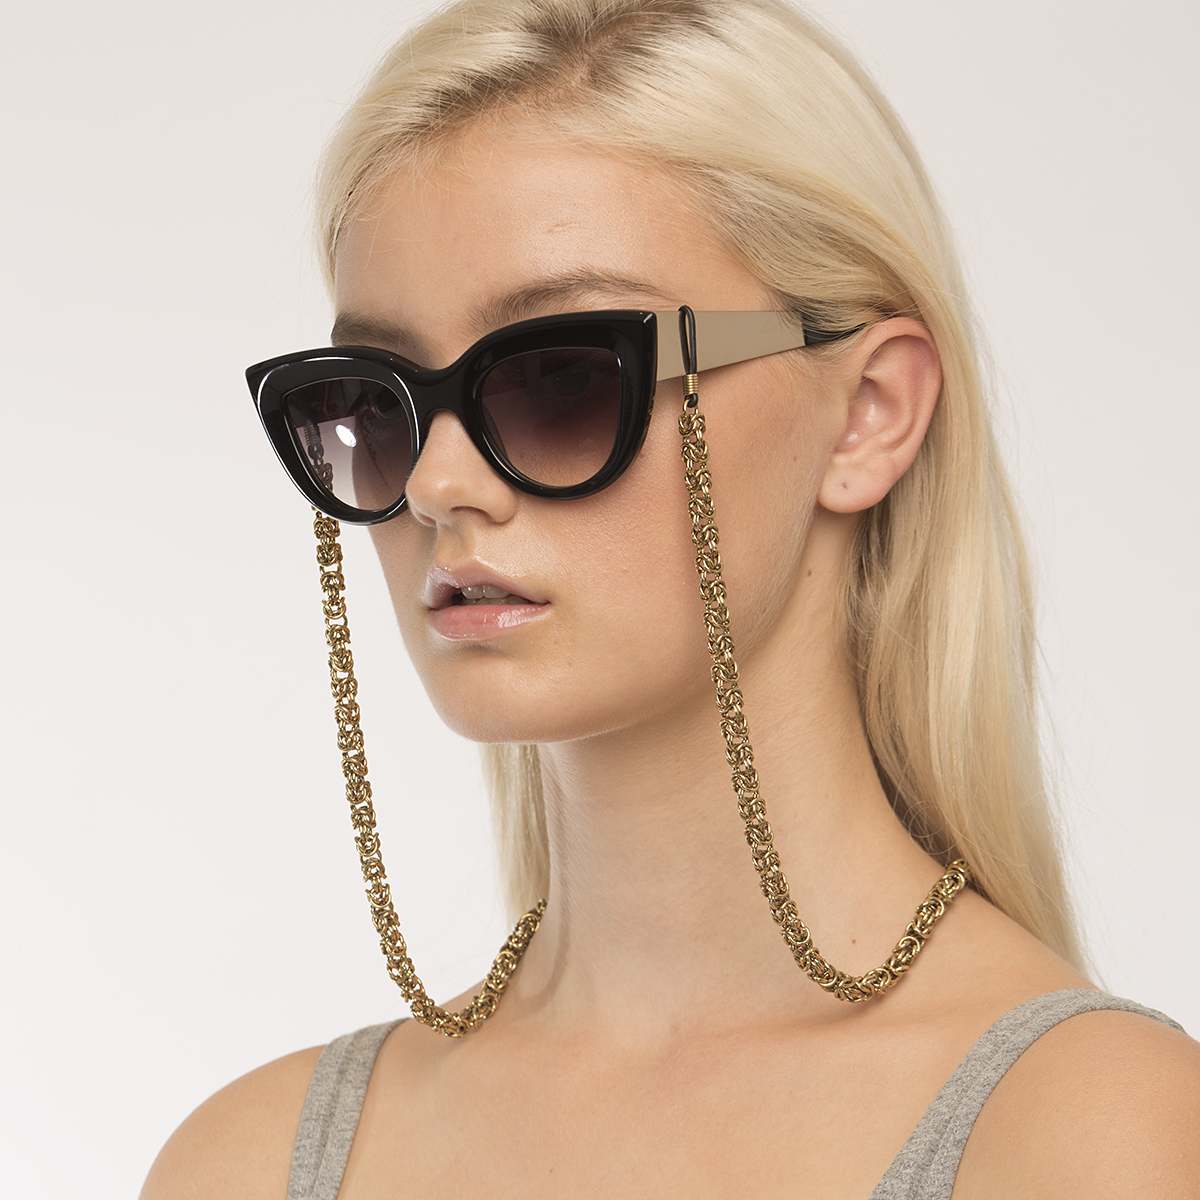 Sonnenbrillen Ketten Modetrends Accessoires Frauen platinblond Haarfarbe